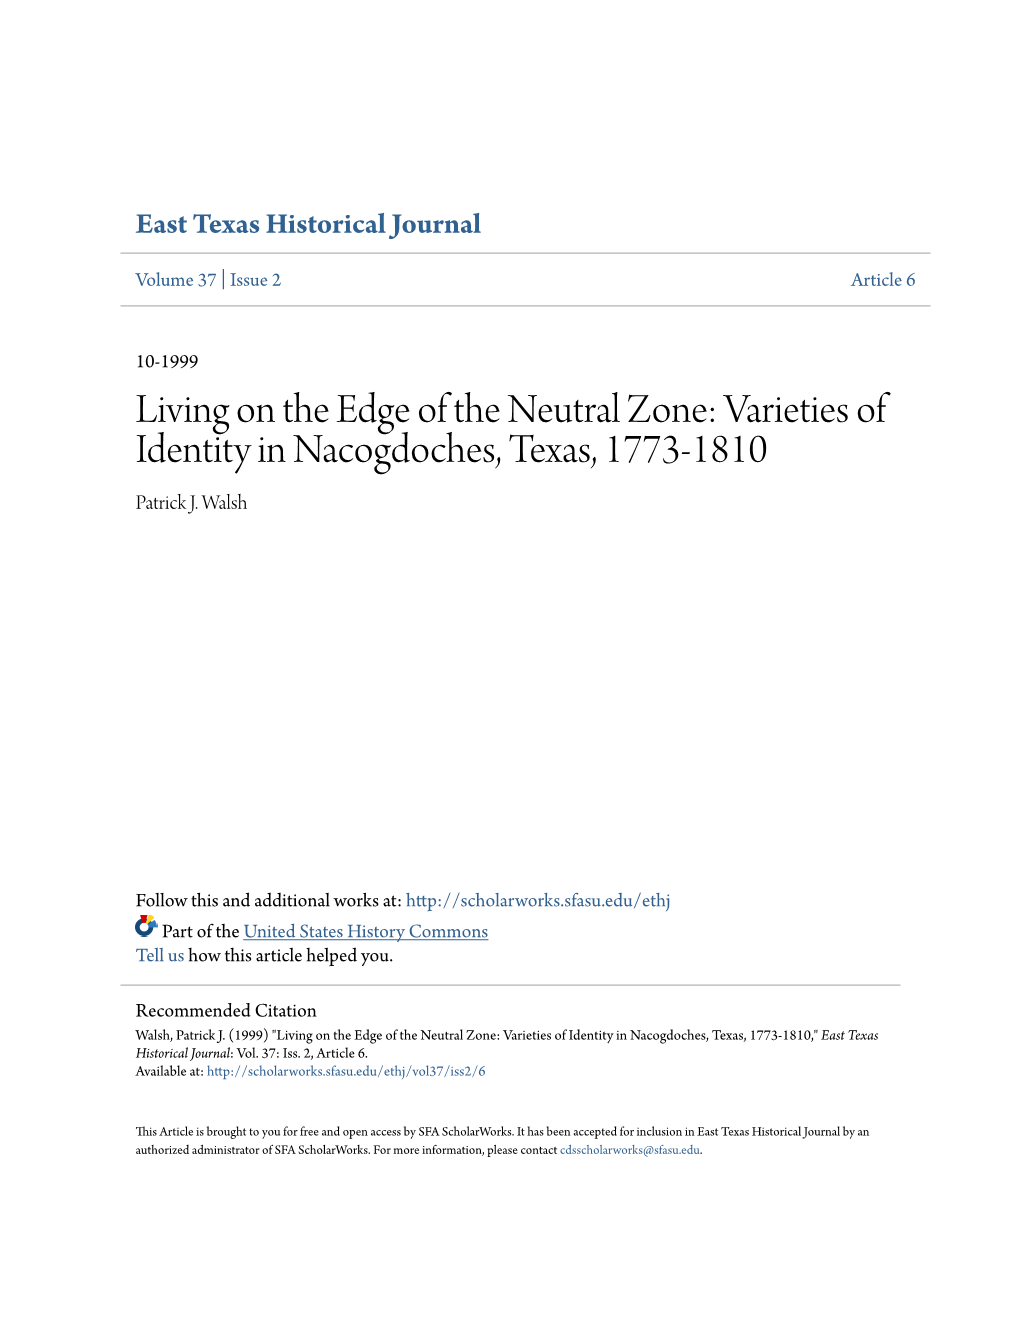 Varieties of Identity in Nacogdoches, Texas, 1773-1810 Patrick J